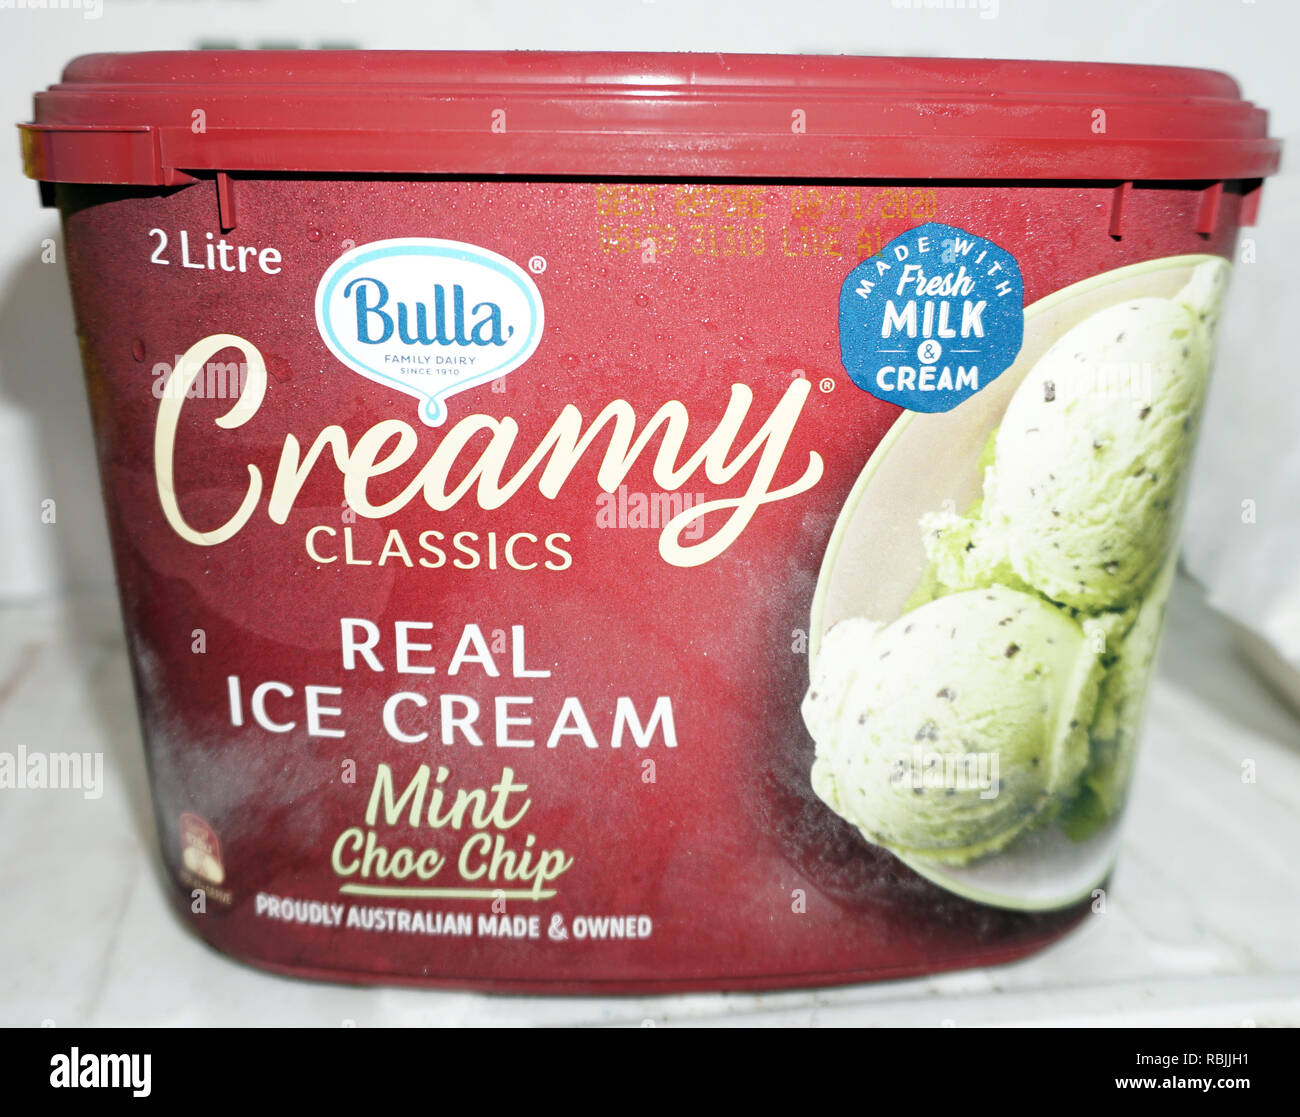 Bulla Creamy Classics Ice Cream Mint Choc Chip 2l tub Stock Photo